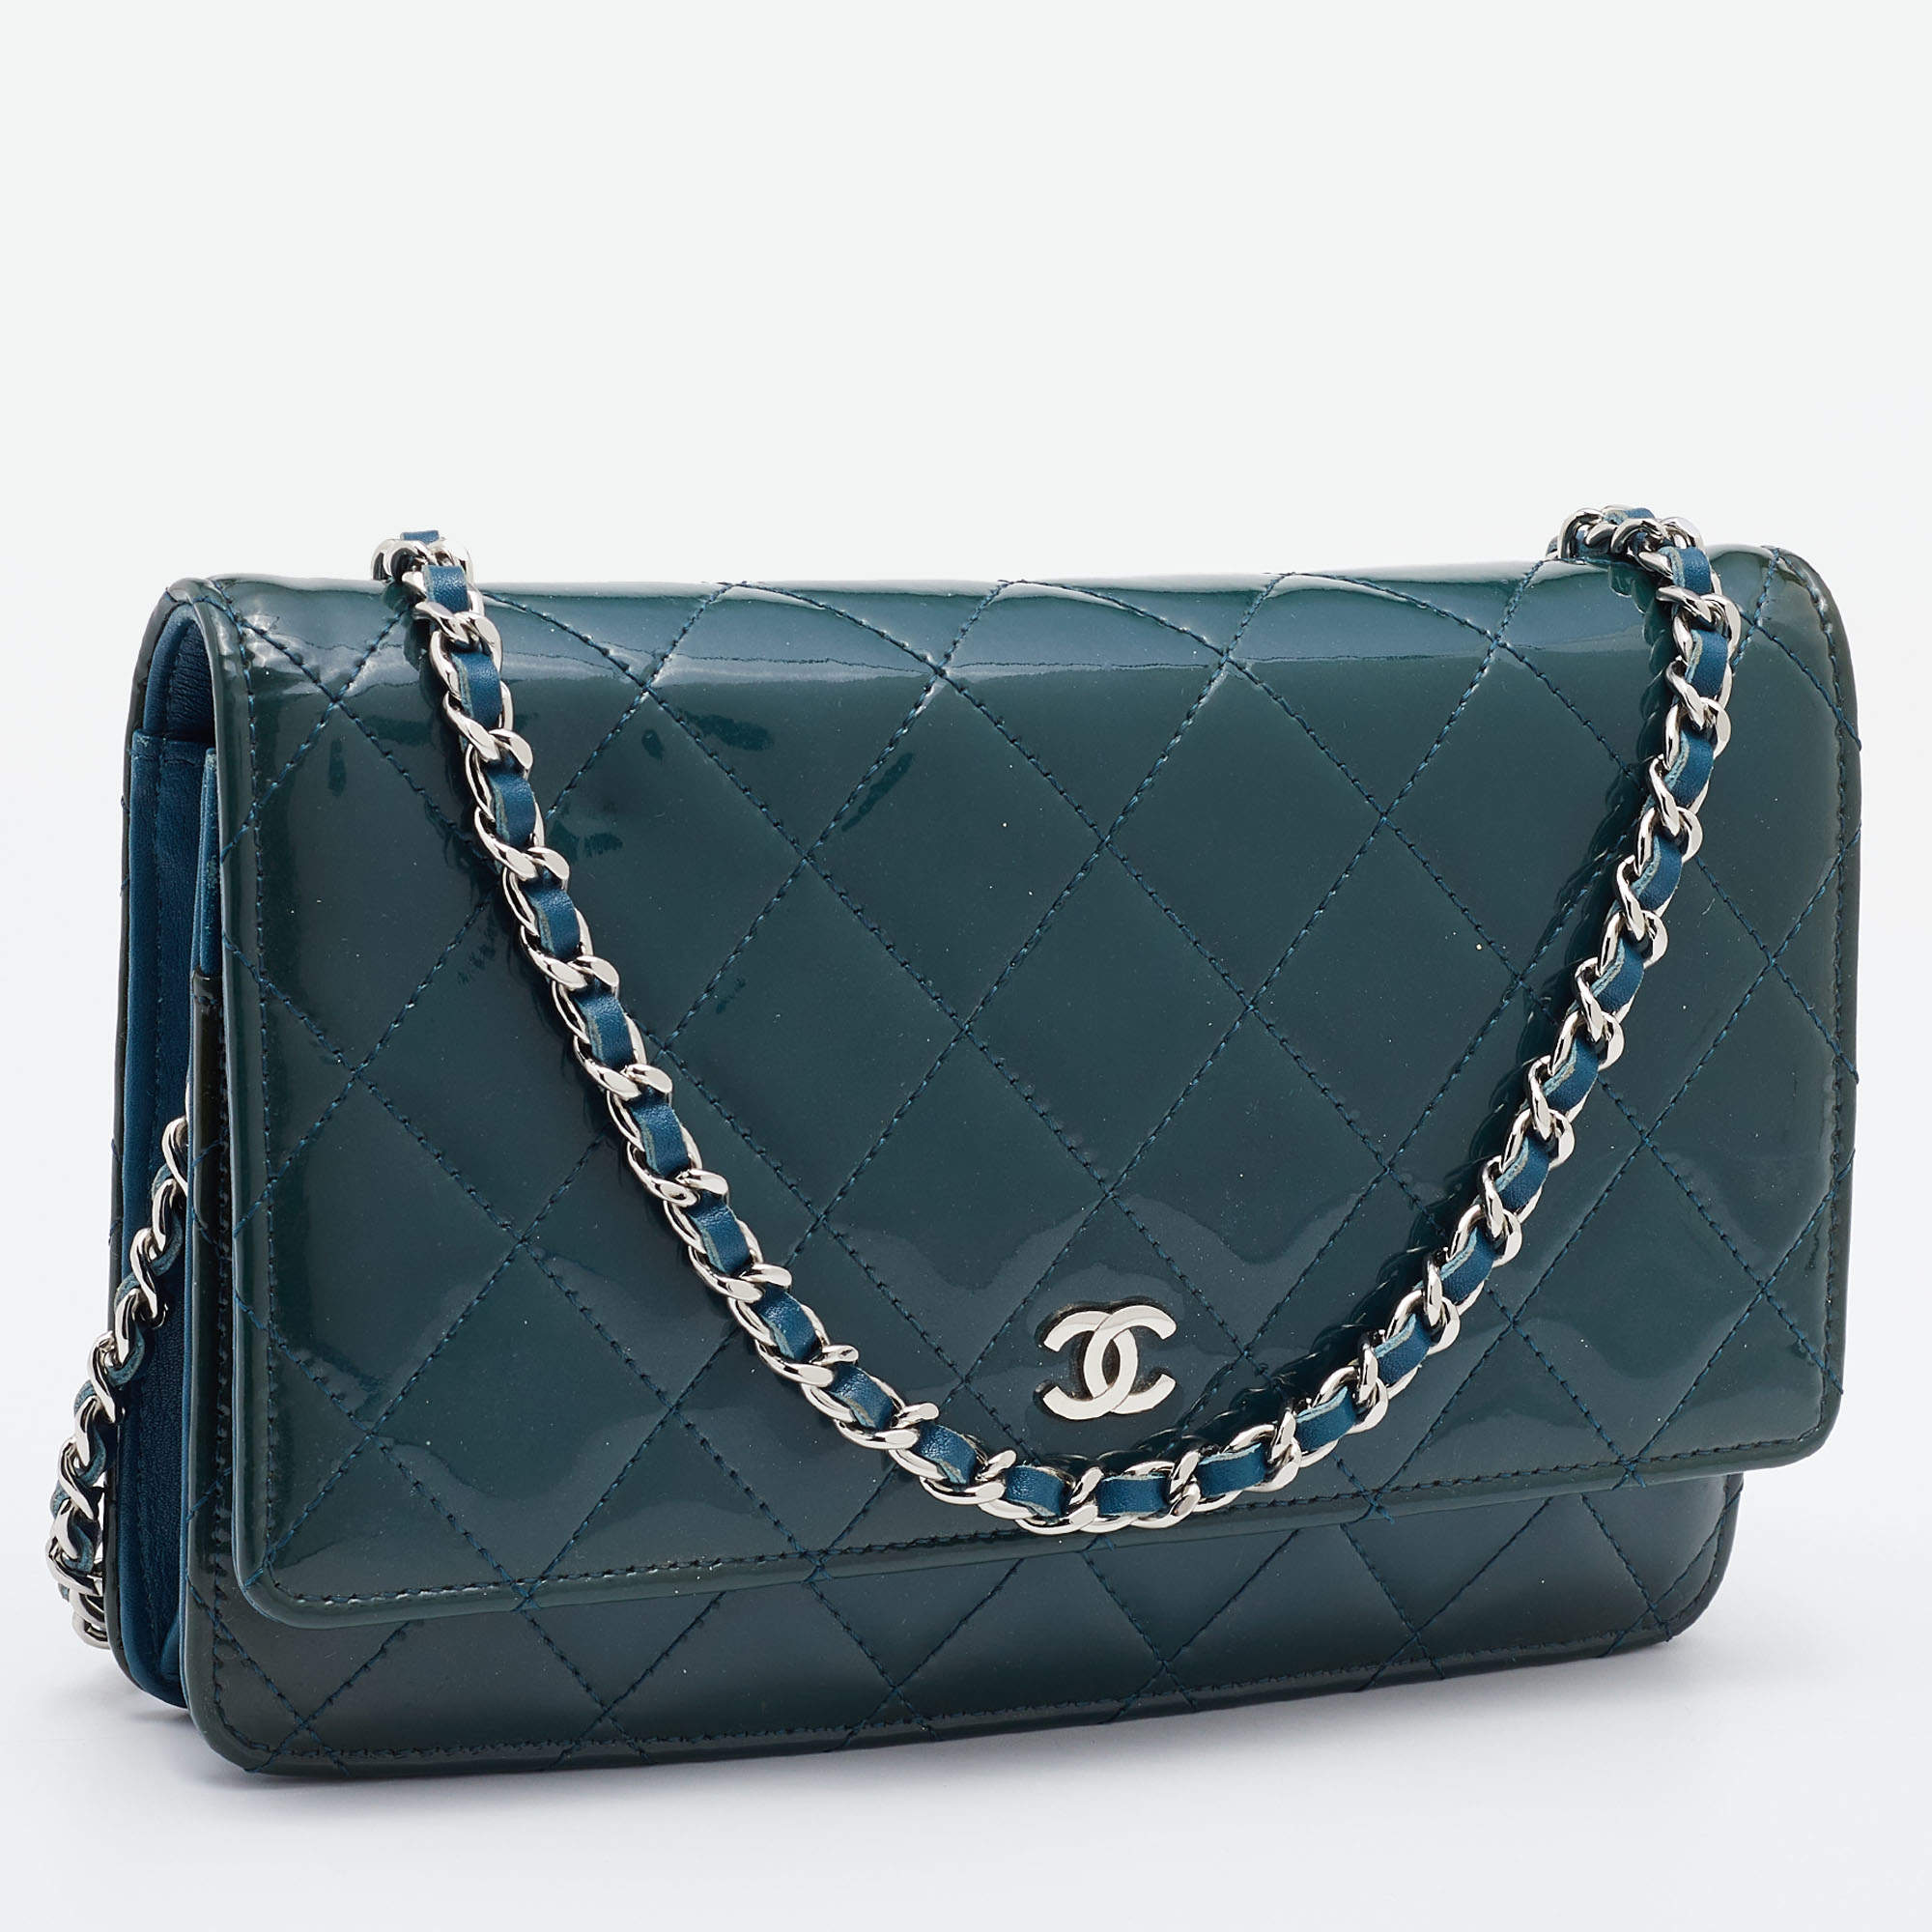 CHANEL Denim classic triple chain flap bag Price: $2450 Condition